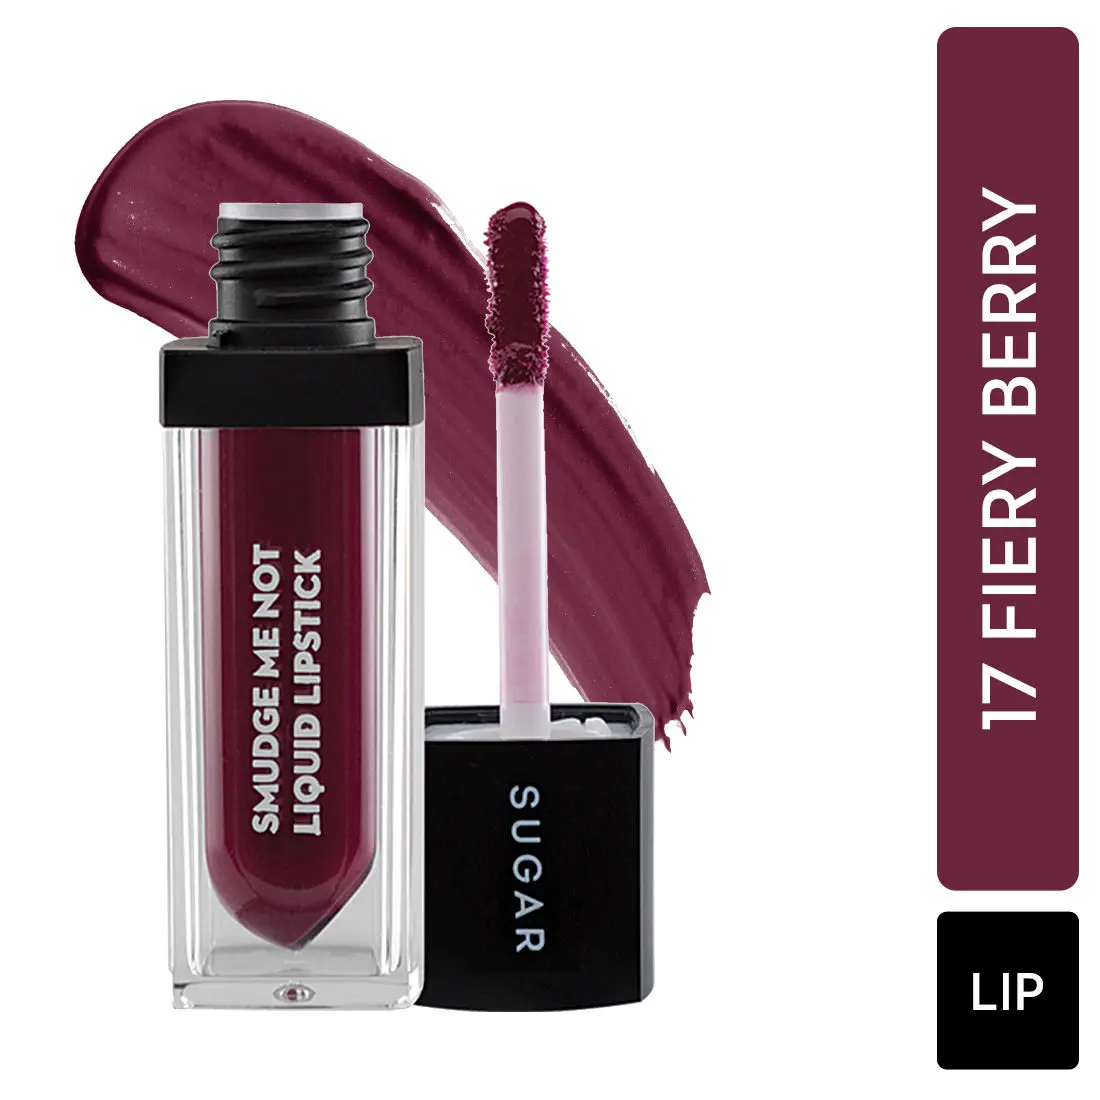 SUGAR Cosmetics - Smudge Me Not - Liquid Lipstick - 17 Fiery Berry (Marsala) - 4.5 ml - Ultra Matte Liquid Lipstick, Transferproof and Waterproof, Lasts Up to 12 hours